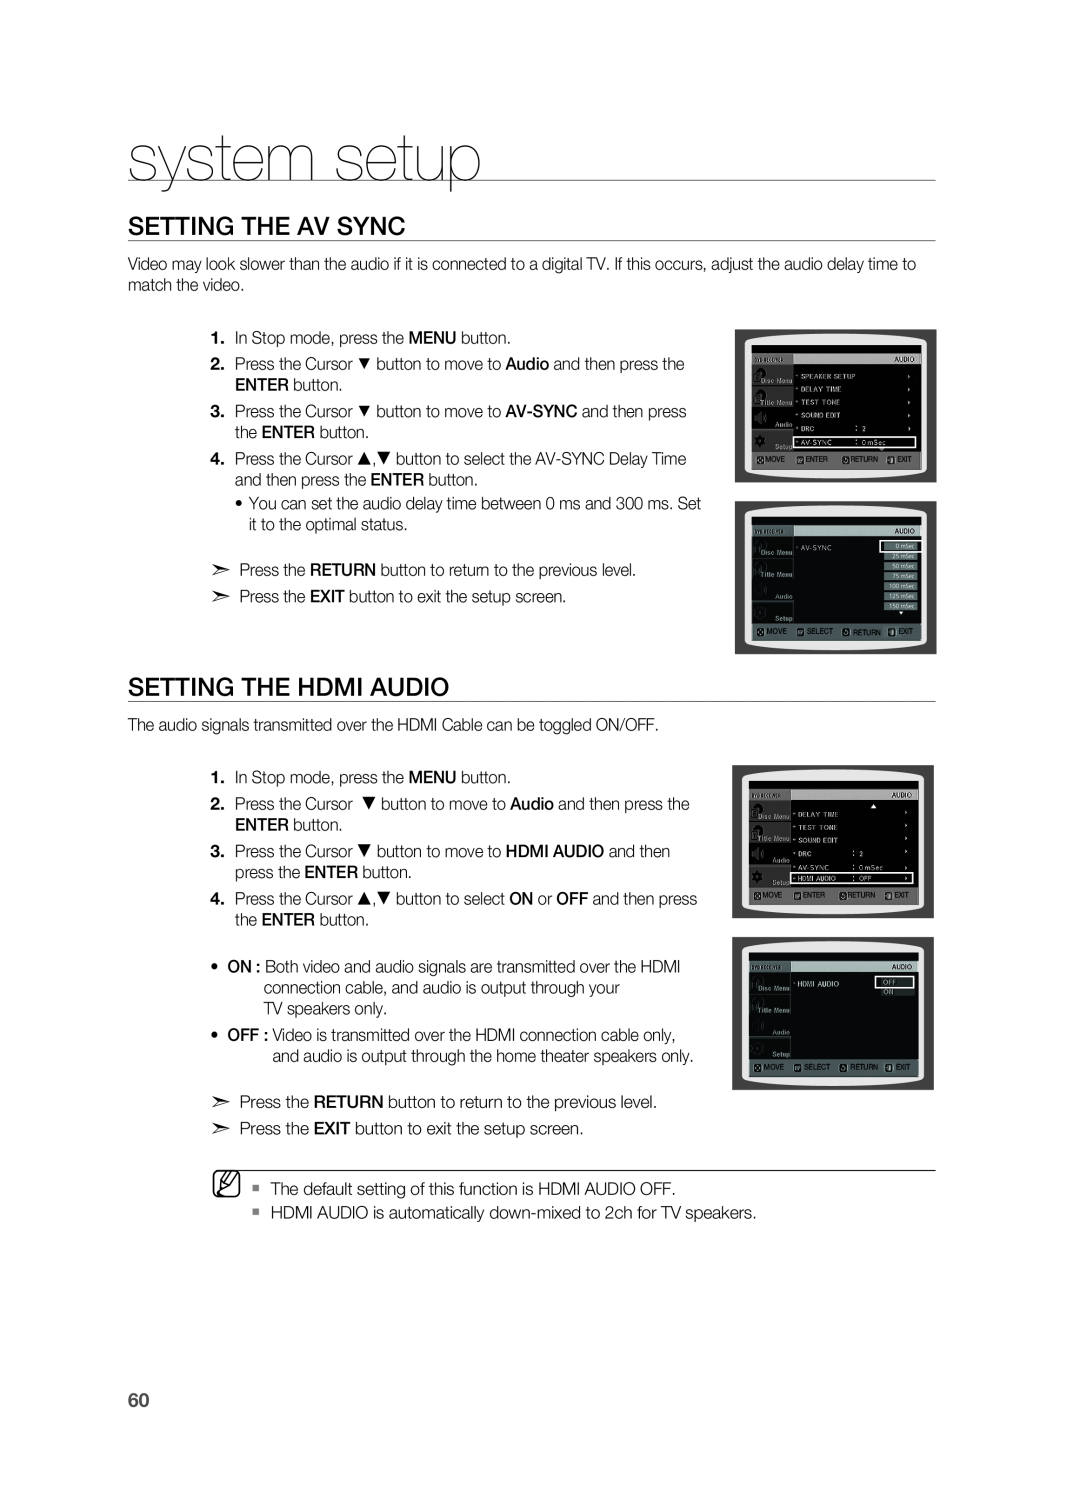 Samsung HT-Z510 manual Setting the AV SYNC, Setting the HDMI Audio, system setup 